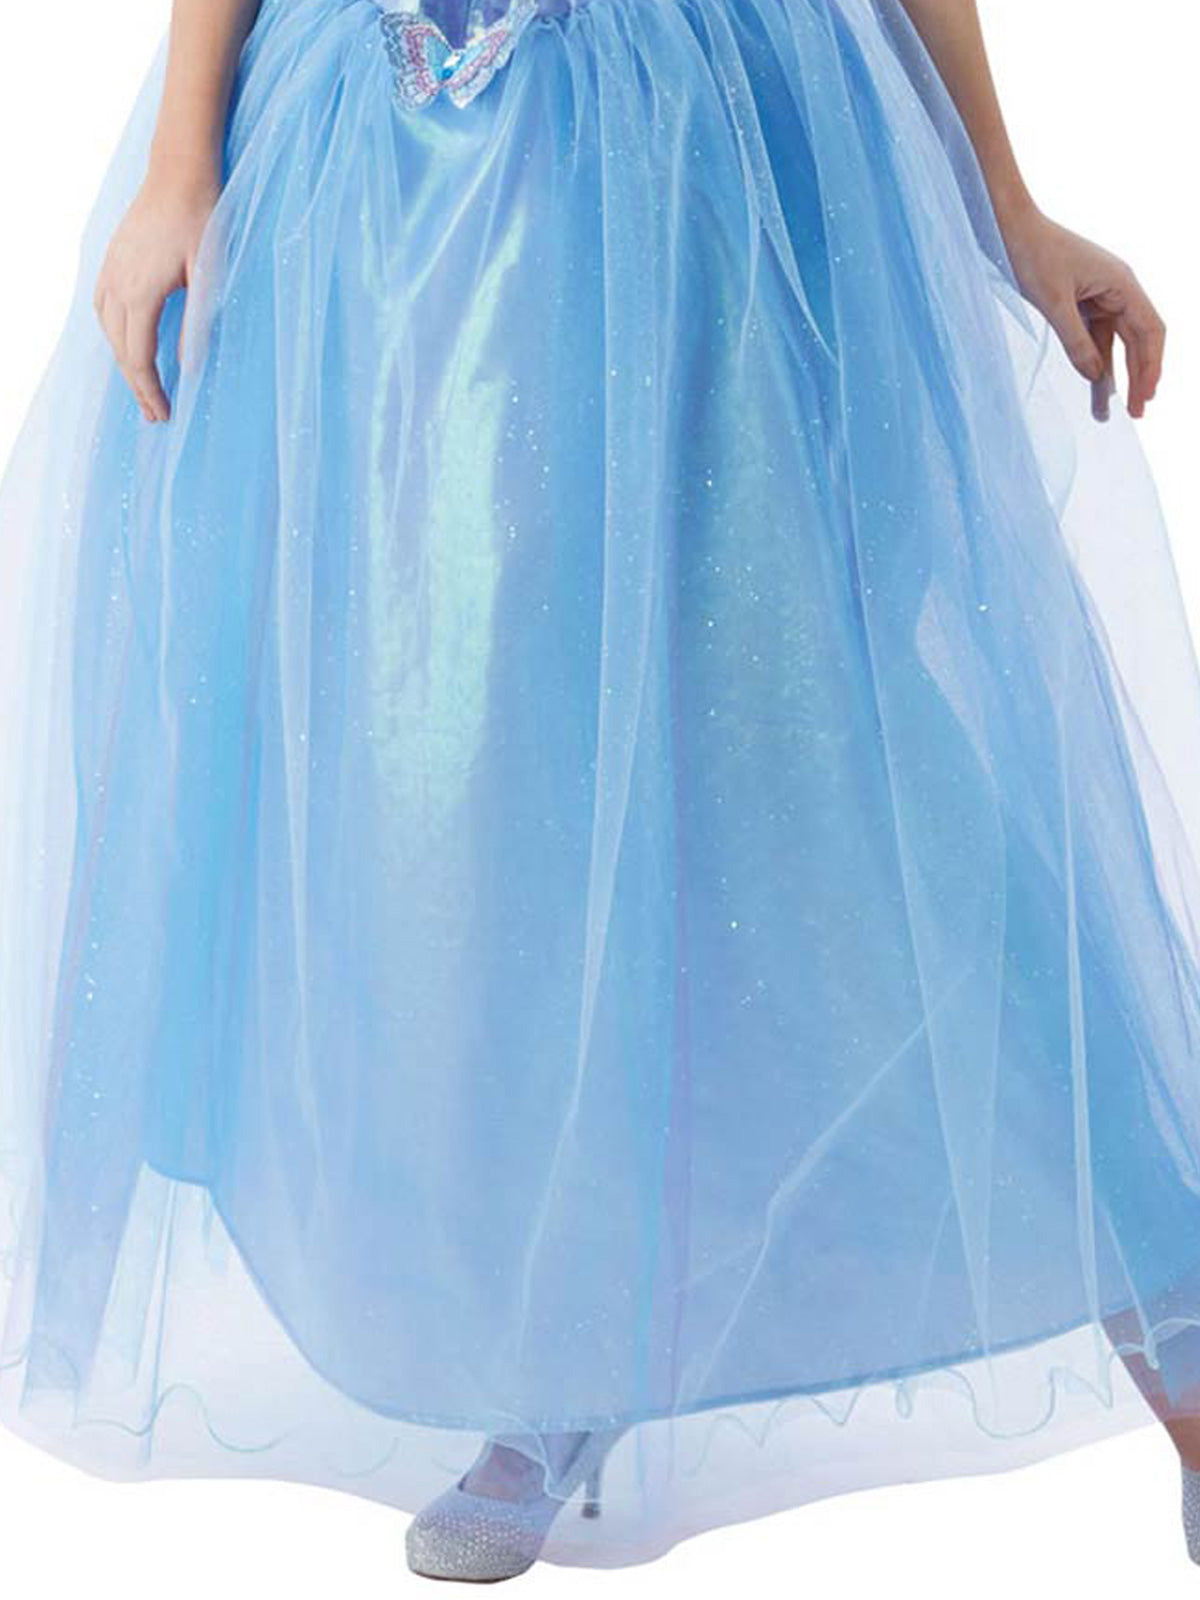 Deluxe Live-Action Cinderella Costume